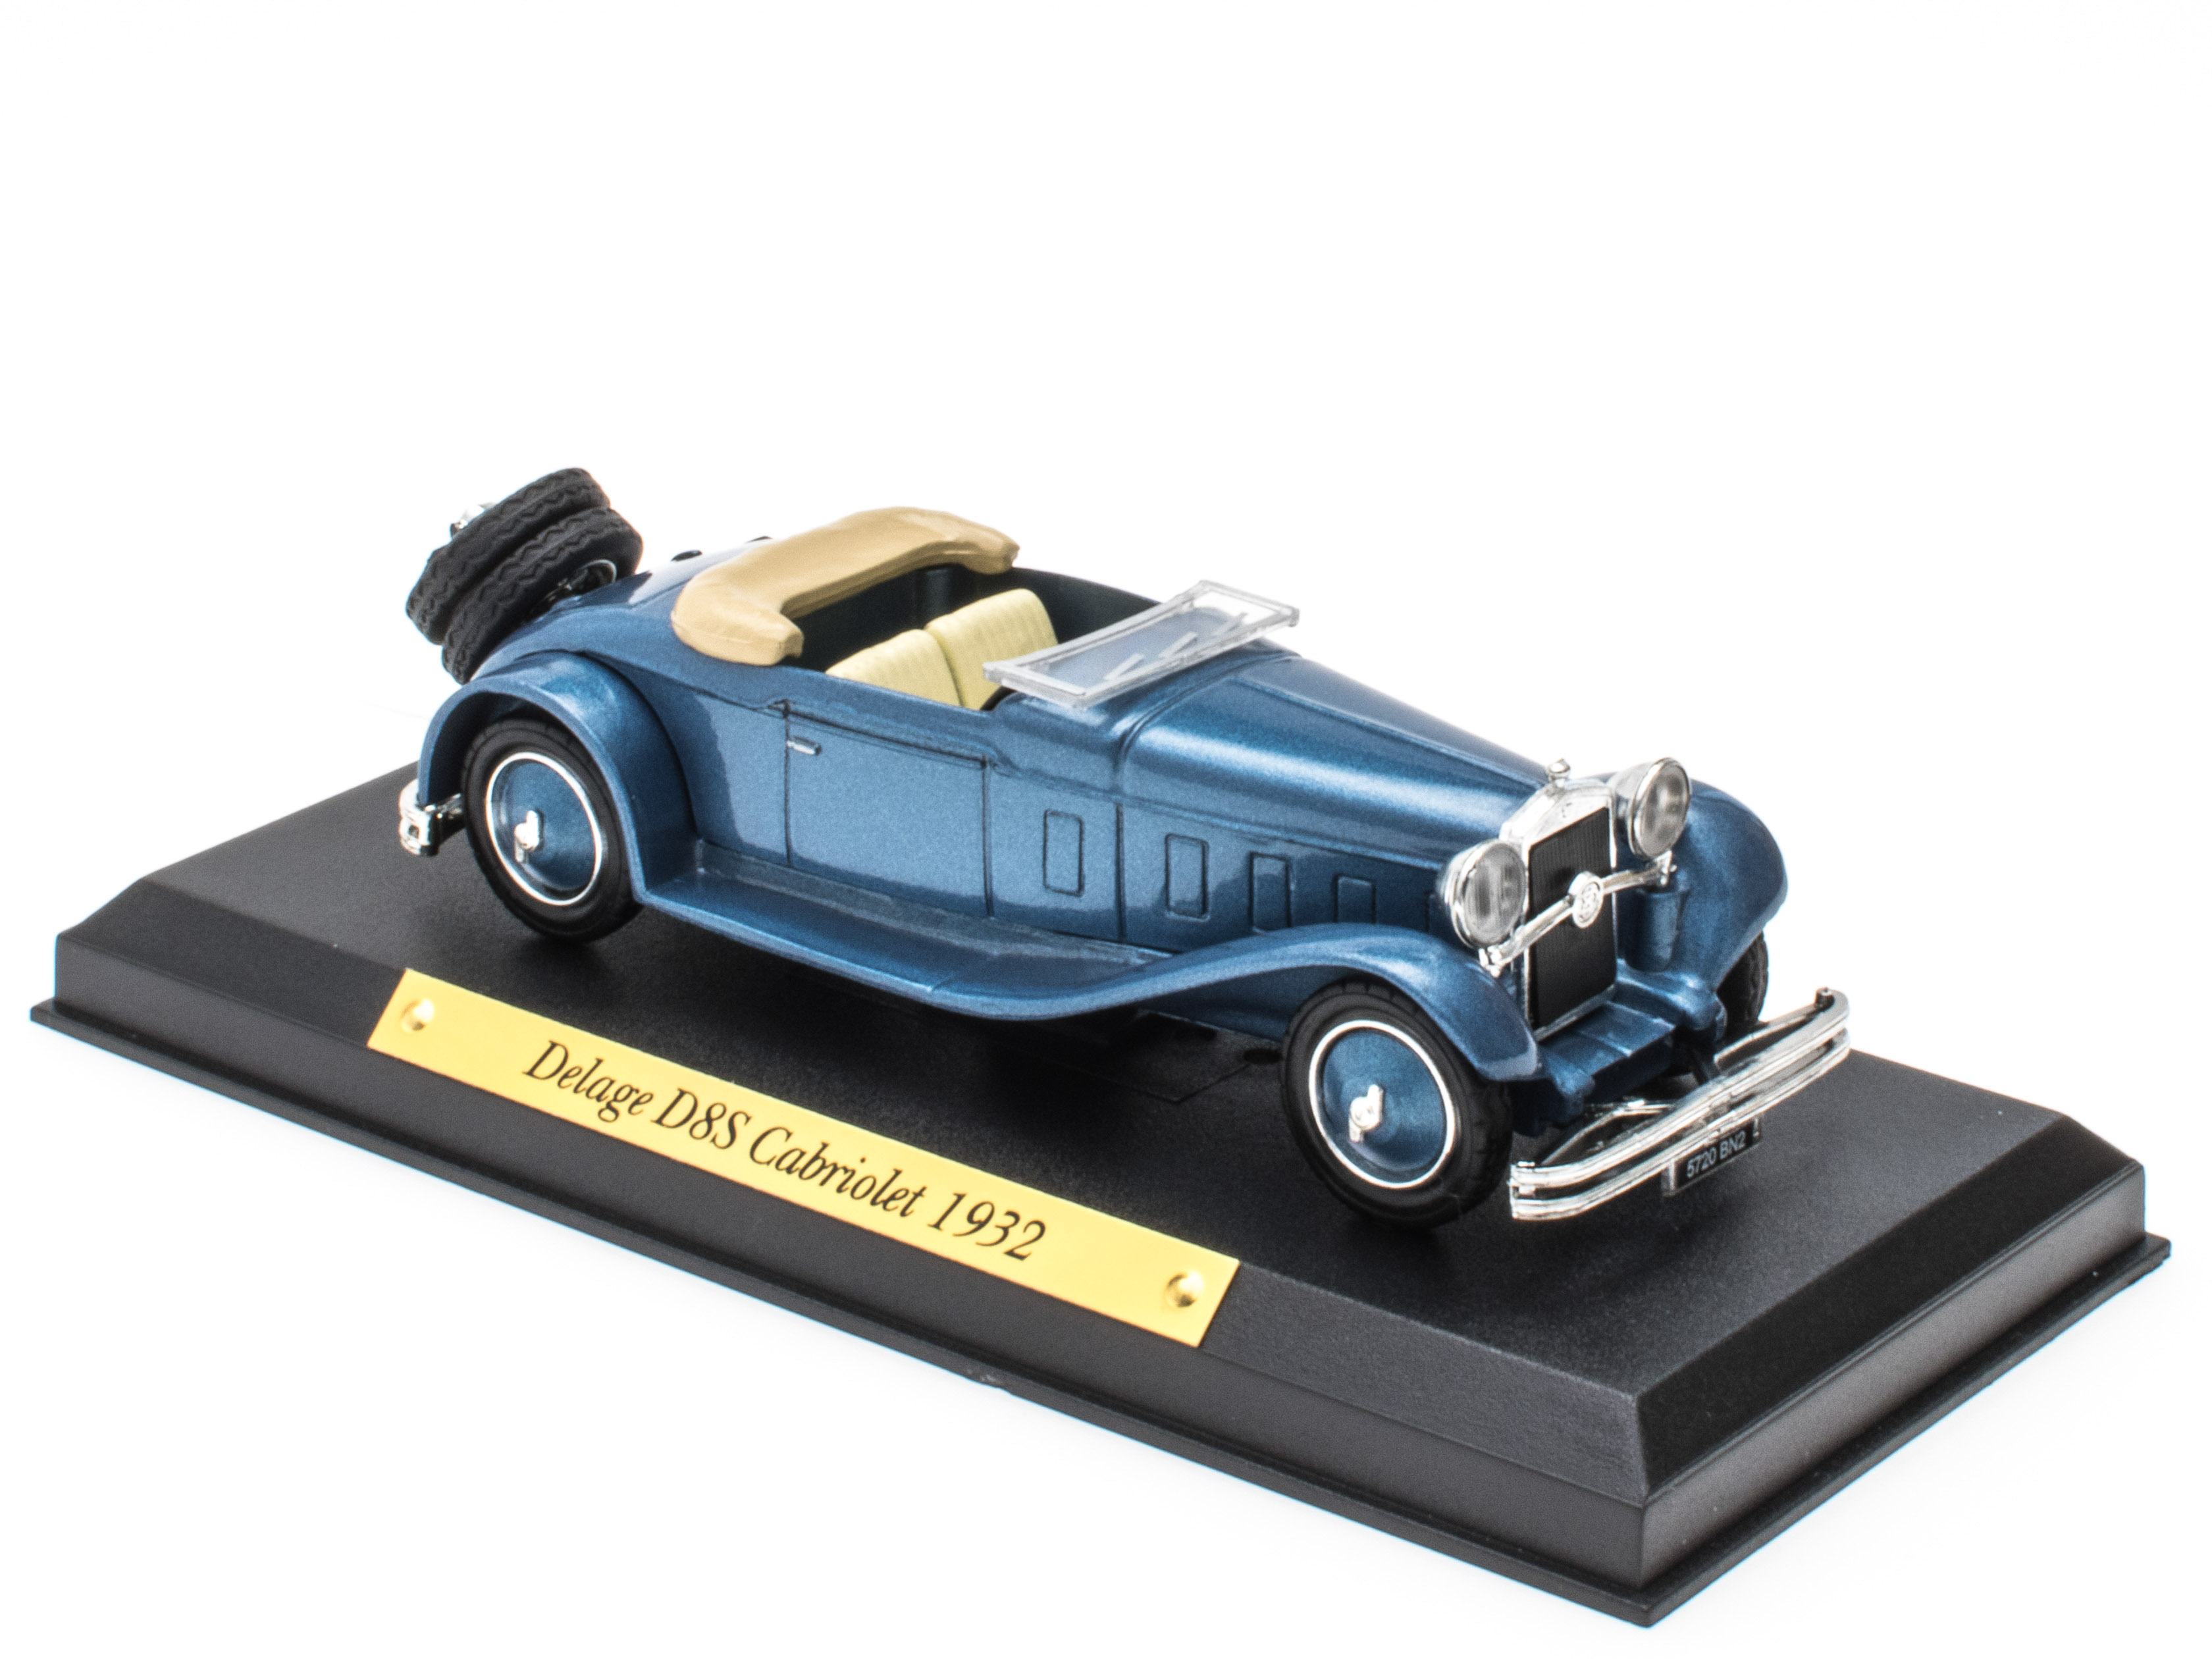 Delage D8S Cabriolet 1932